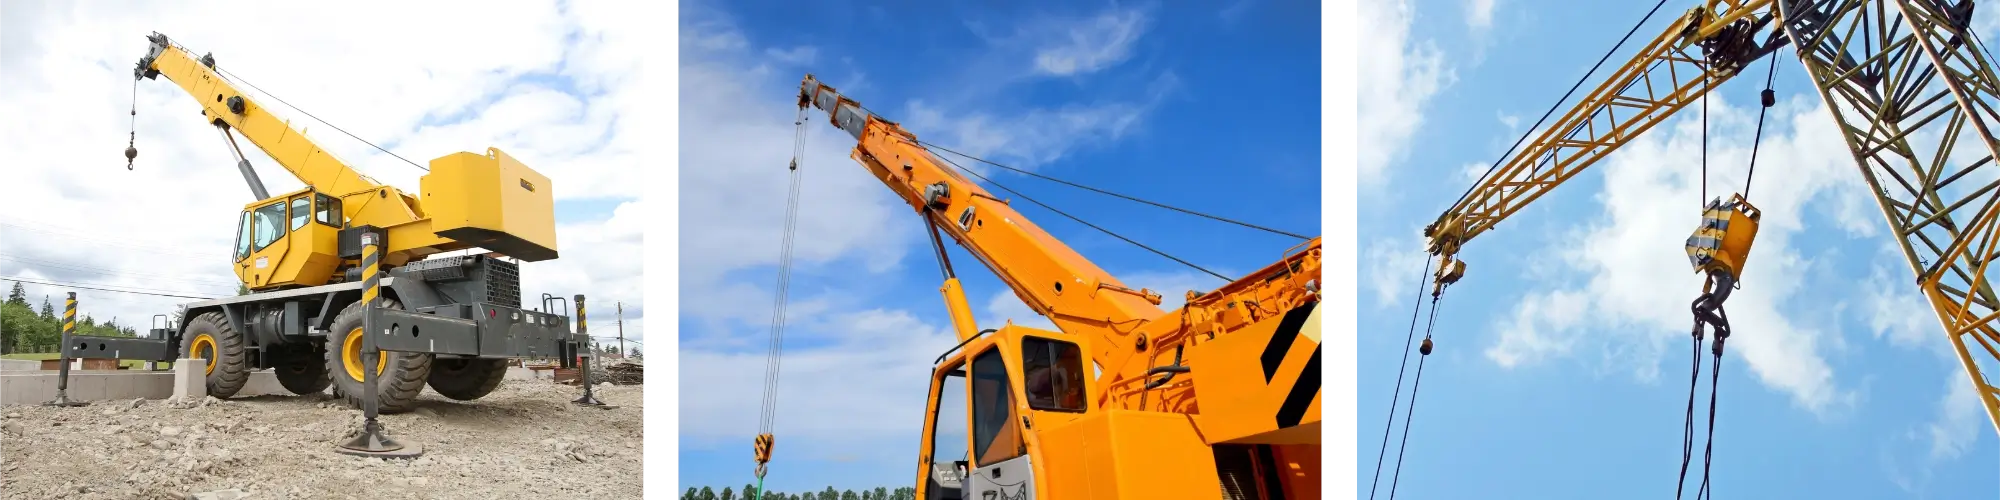 Cranes and lifting equipment